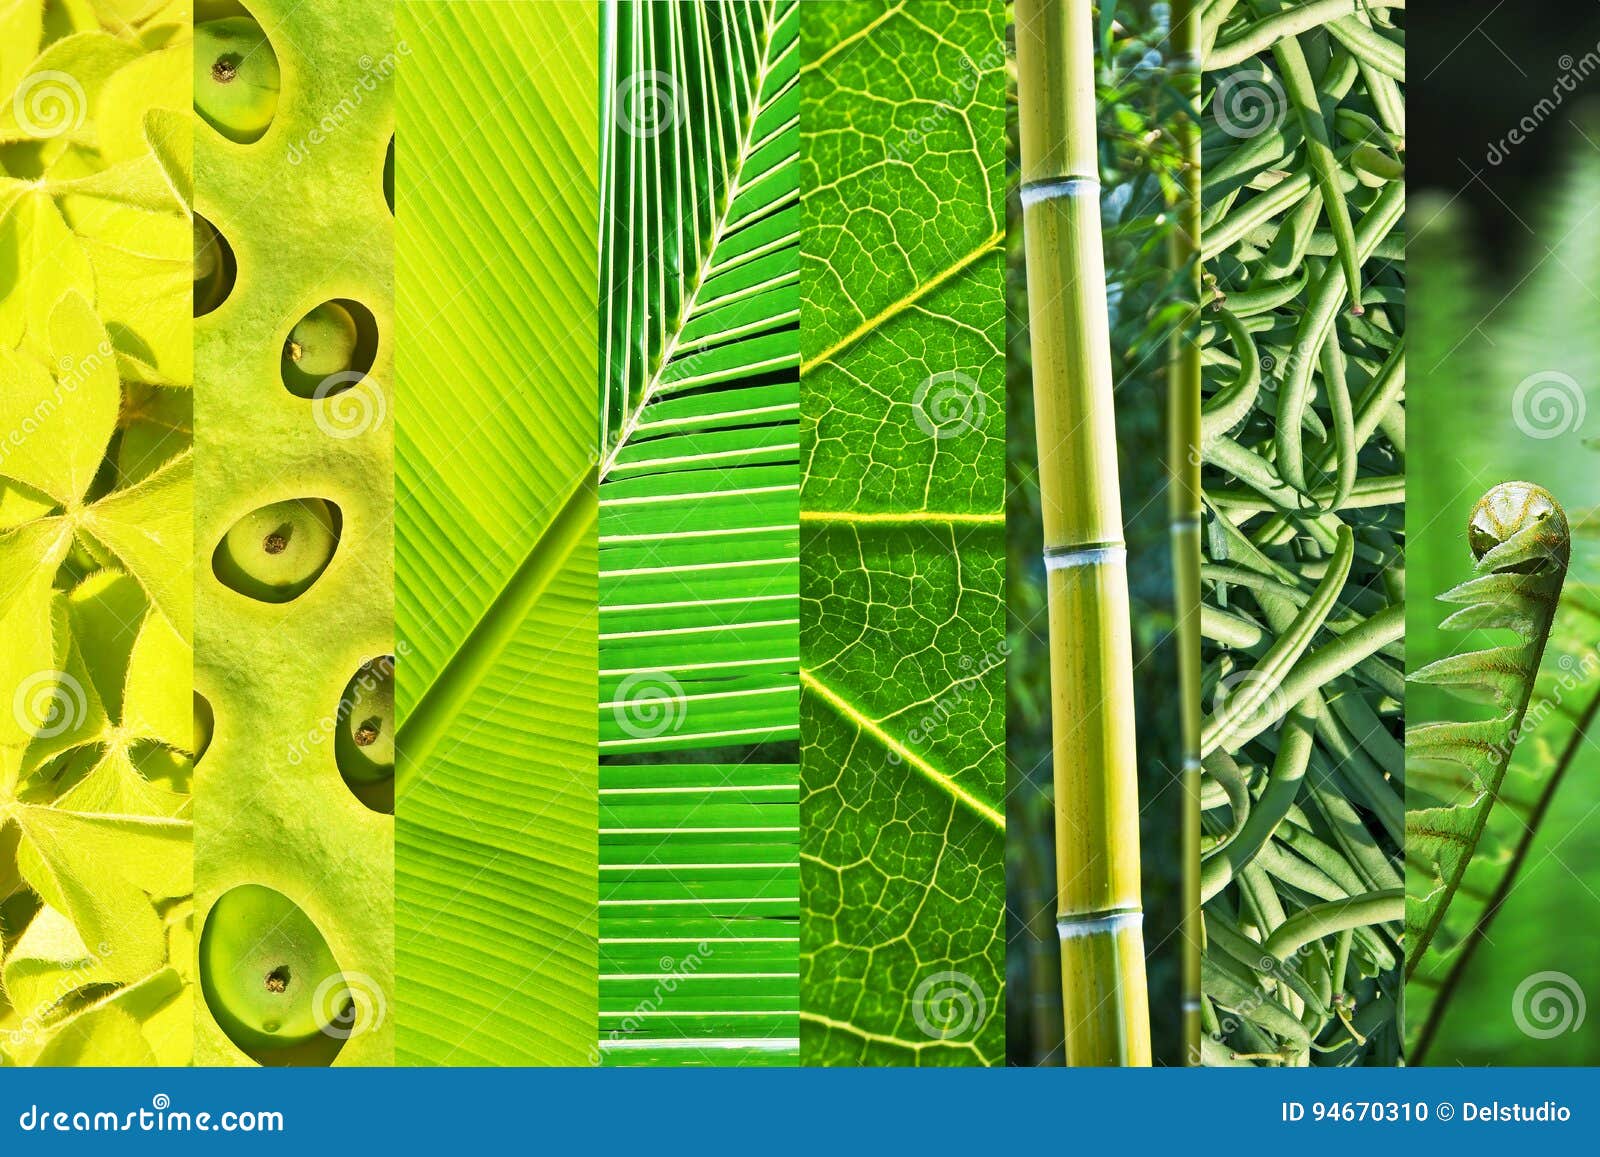 vegetal green gradation collage, nature color concept